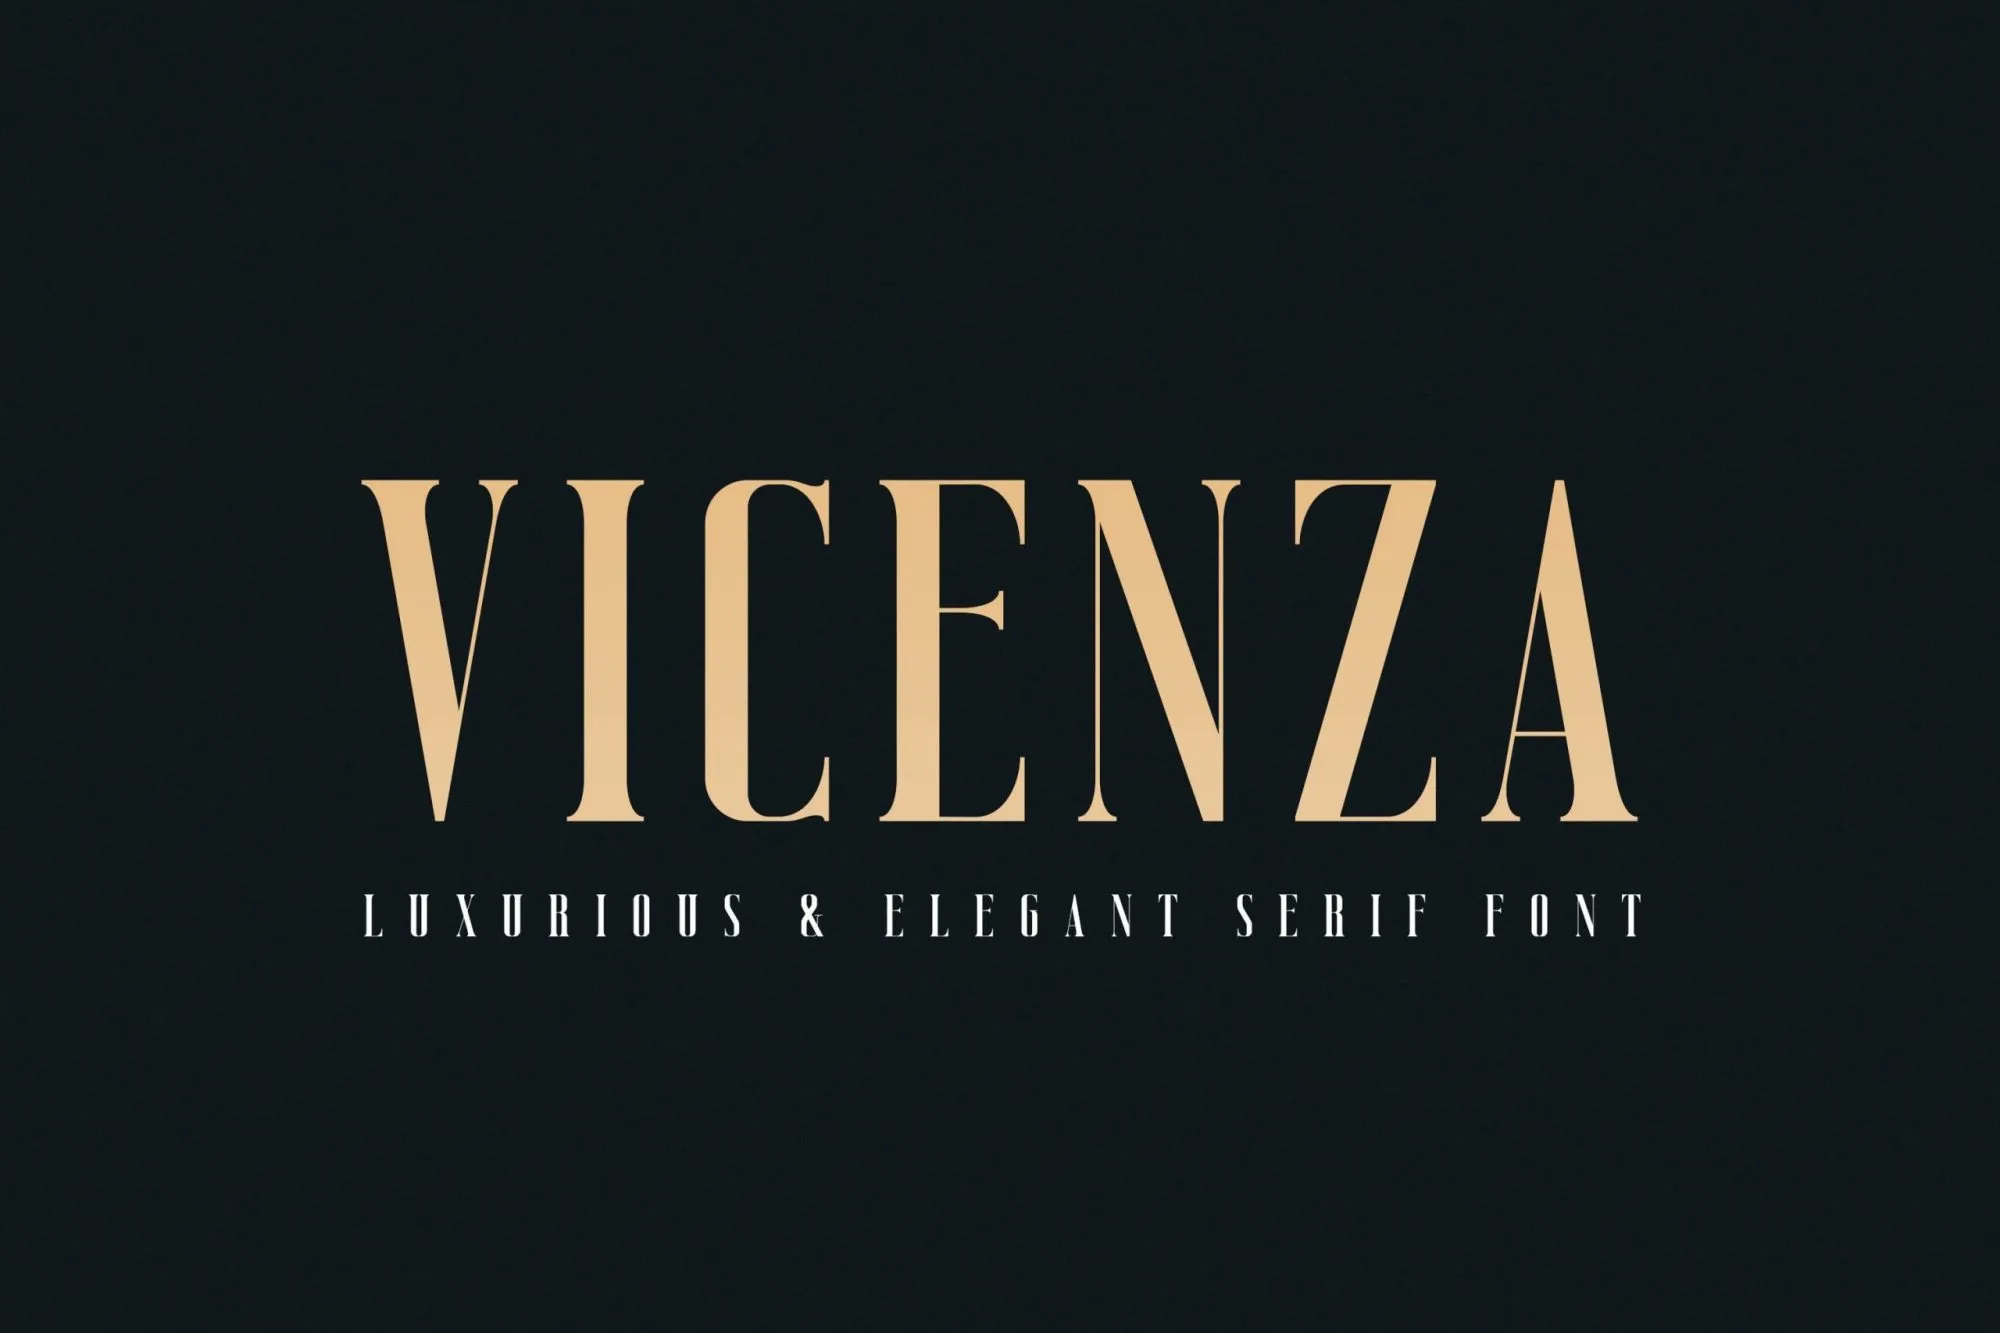 Vicenza Font